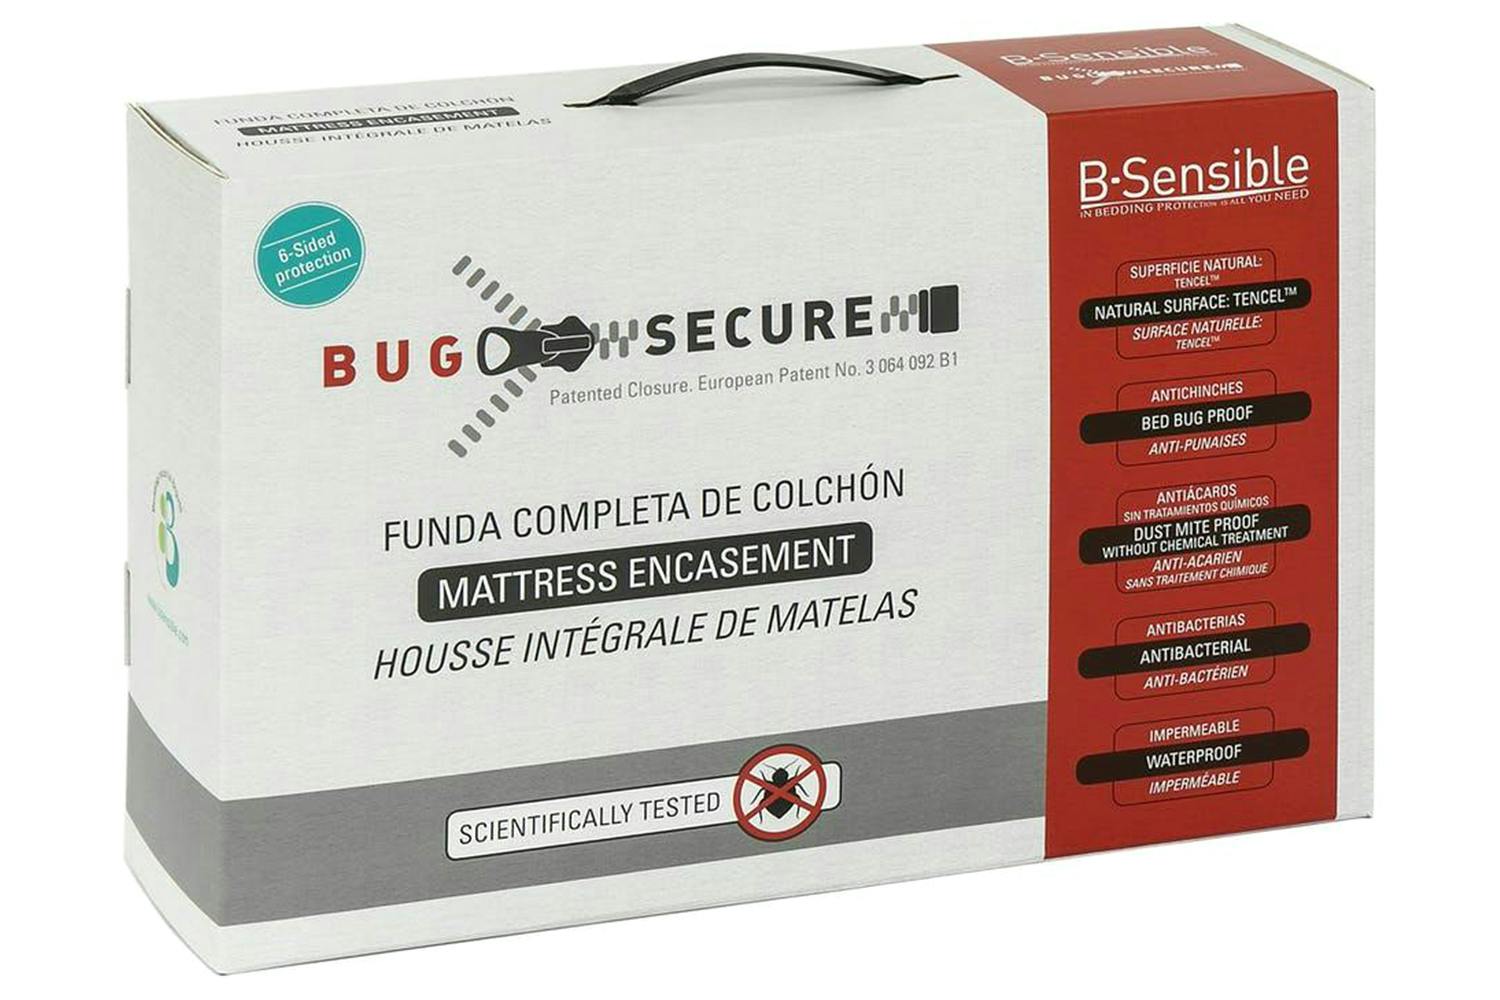 B-Sensible | Bug Secure | Mattress Protector | Double